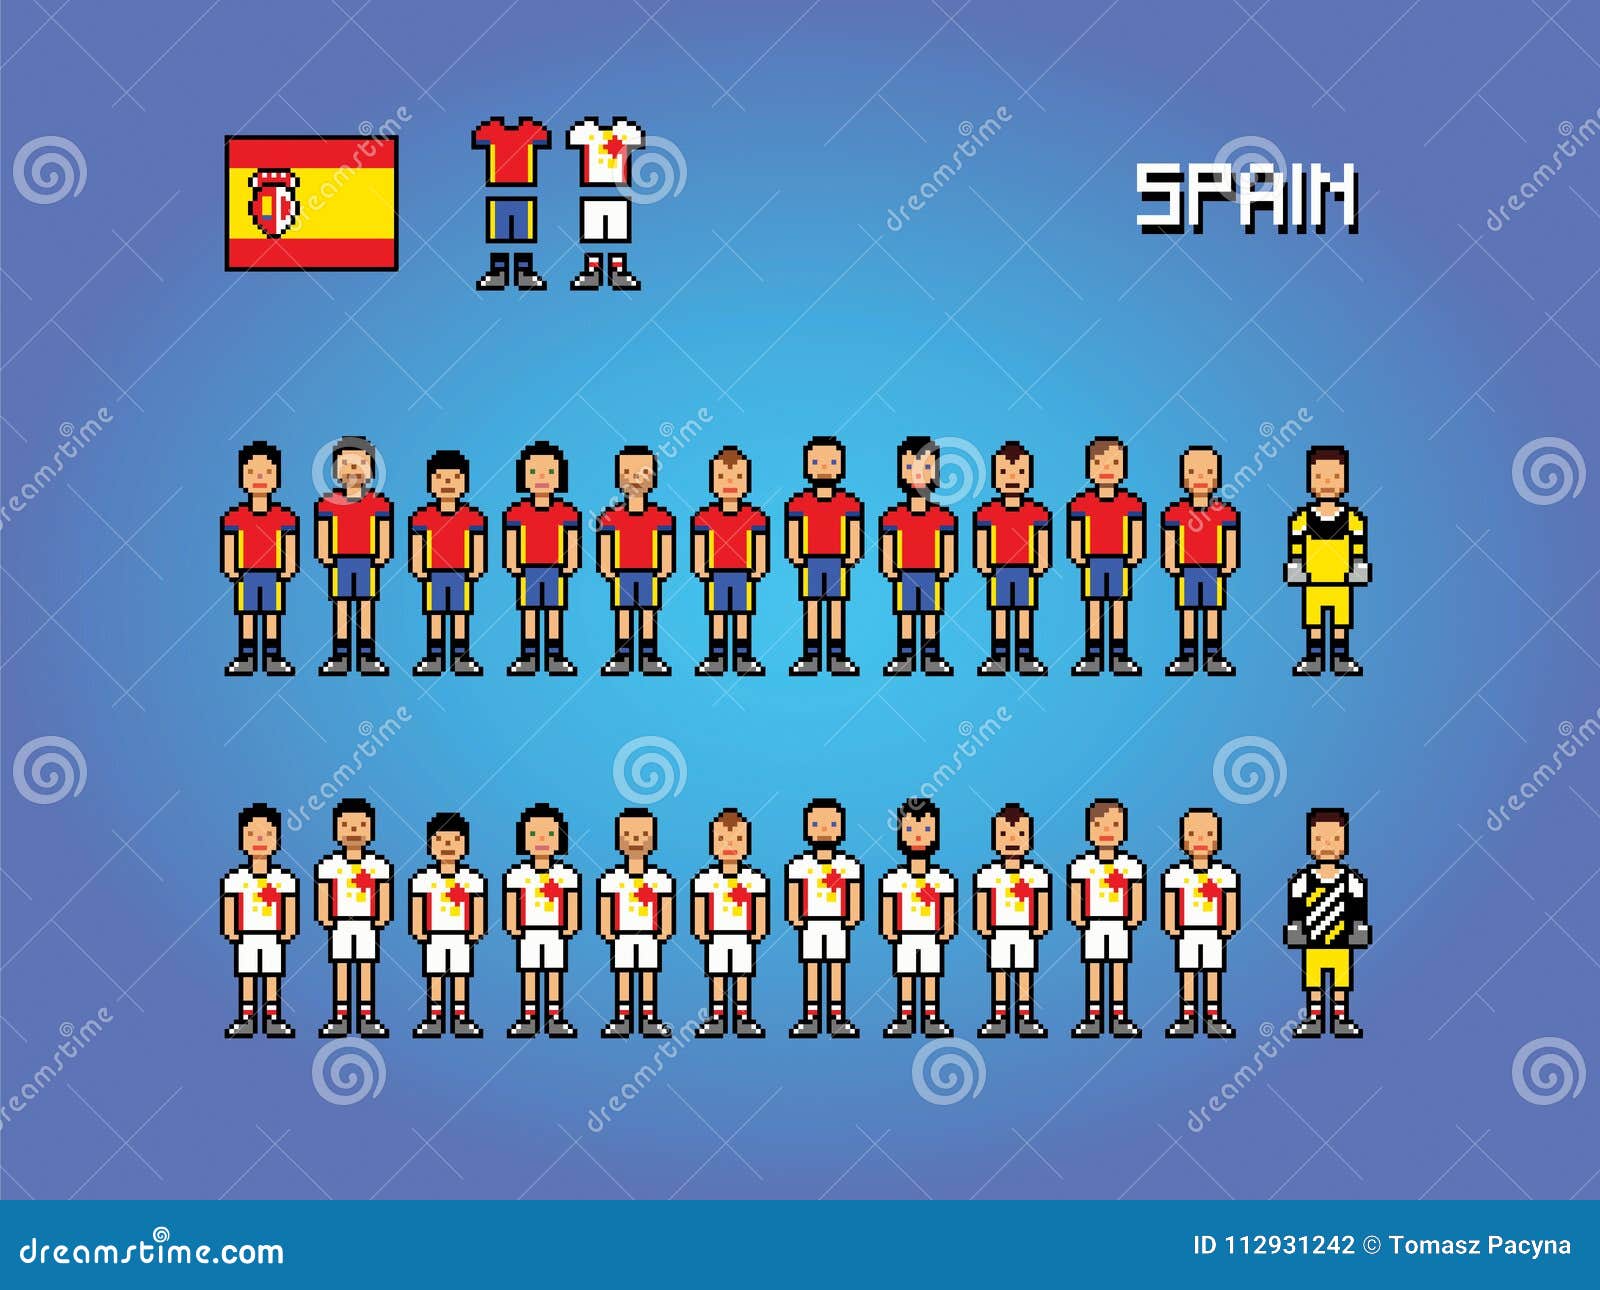 Spain Football Team Uniforms Pixel Art Game Illustration